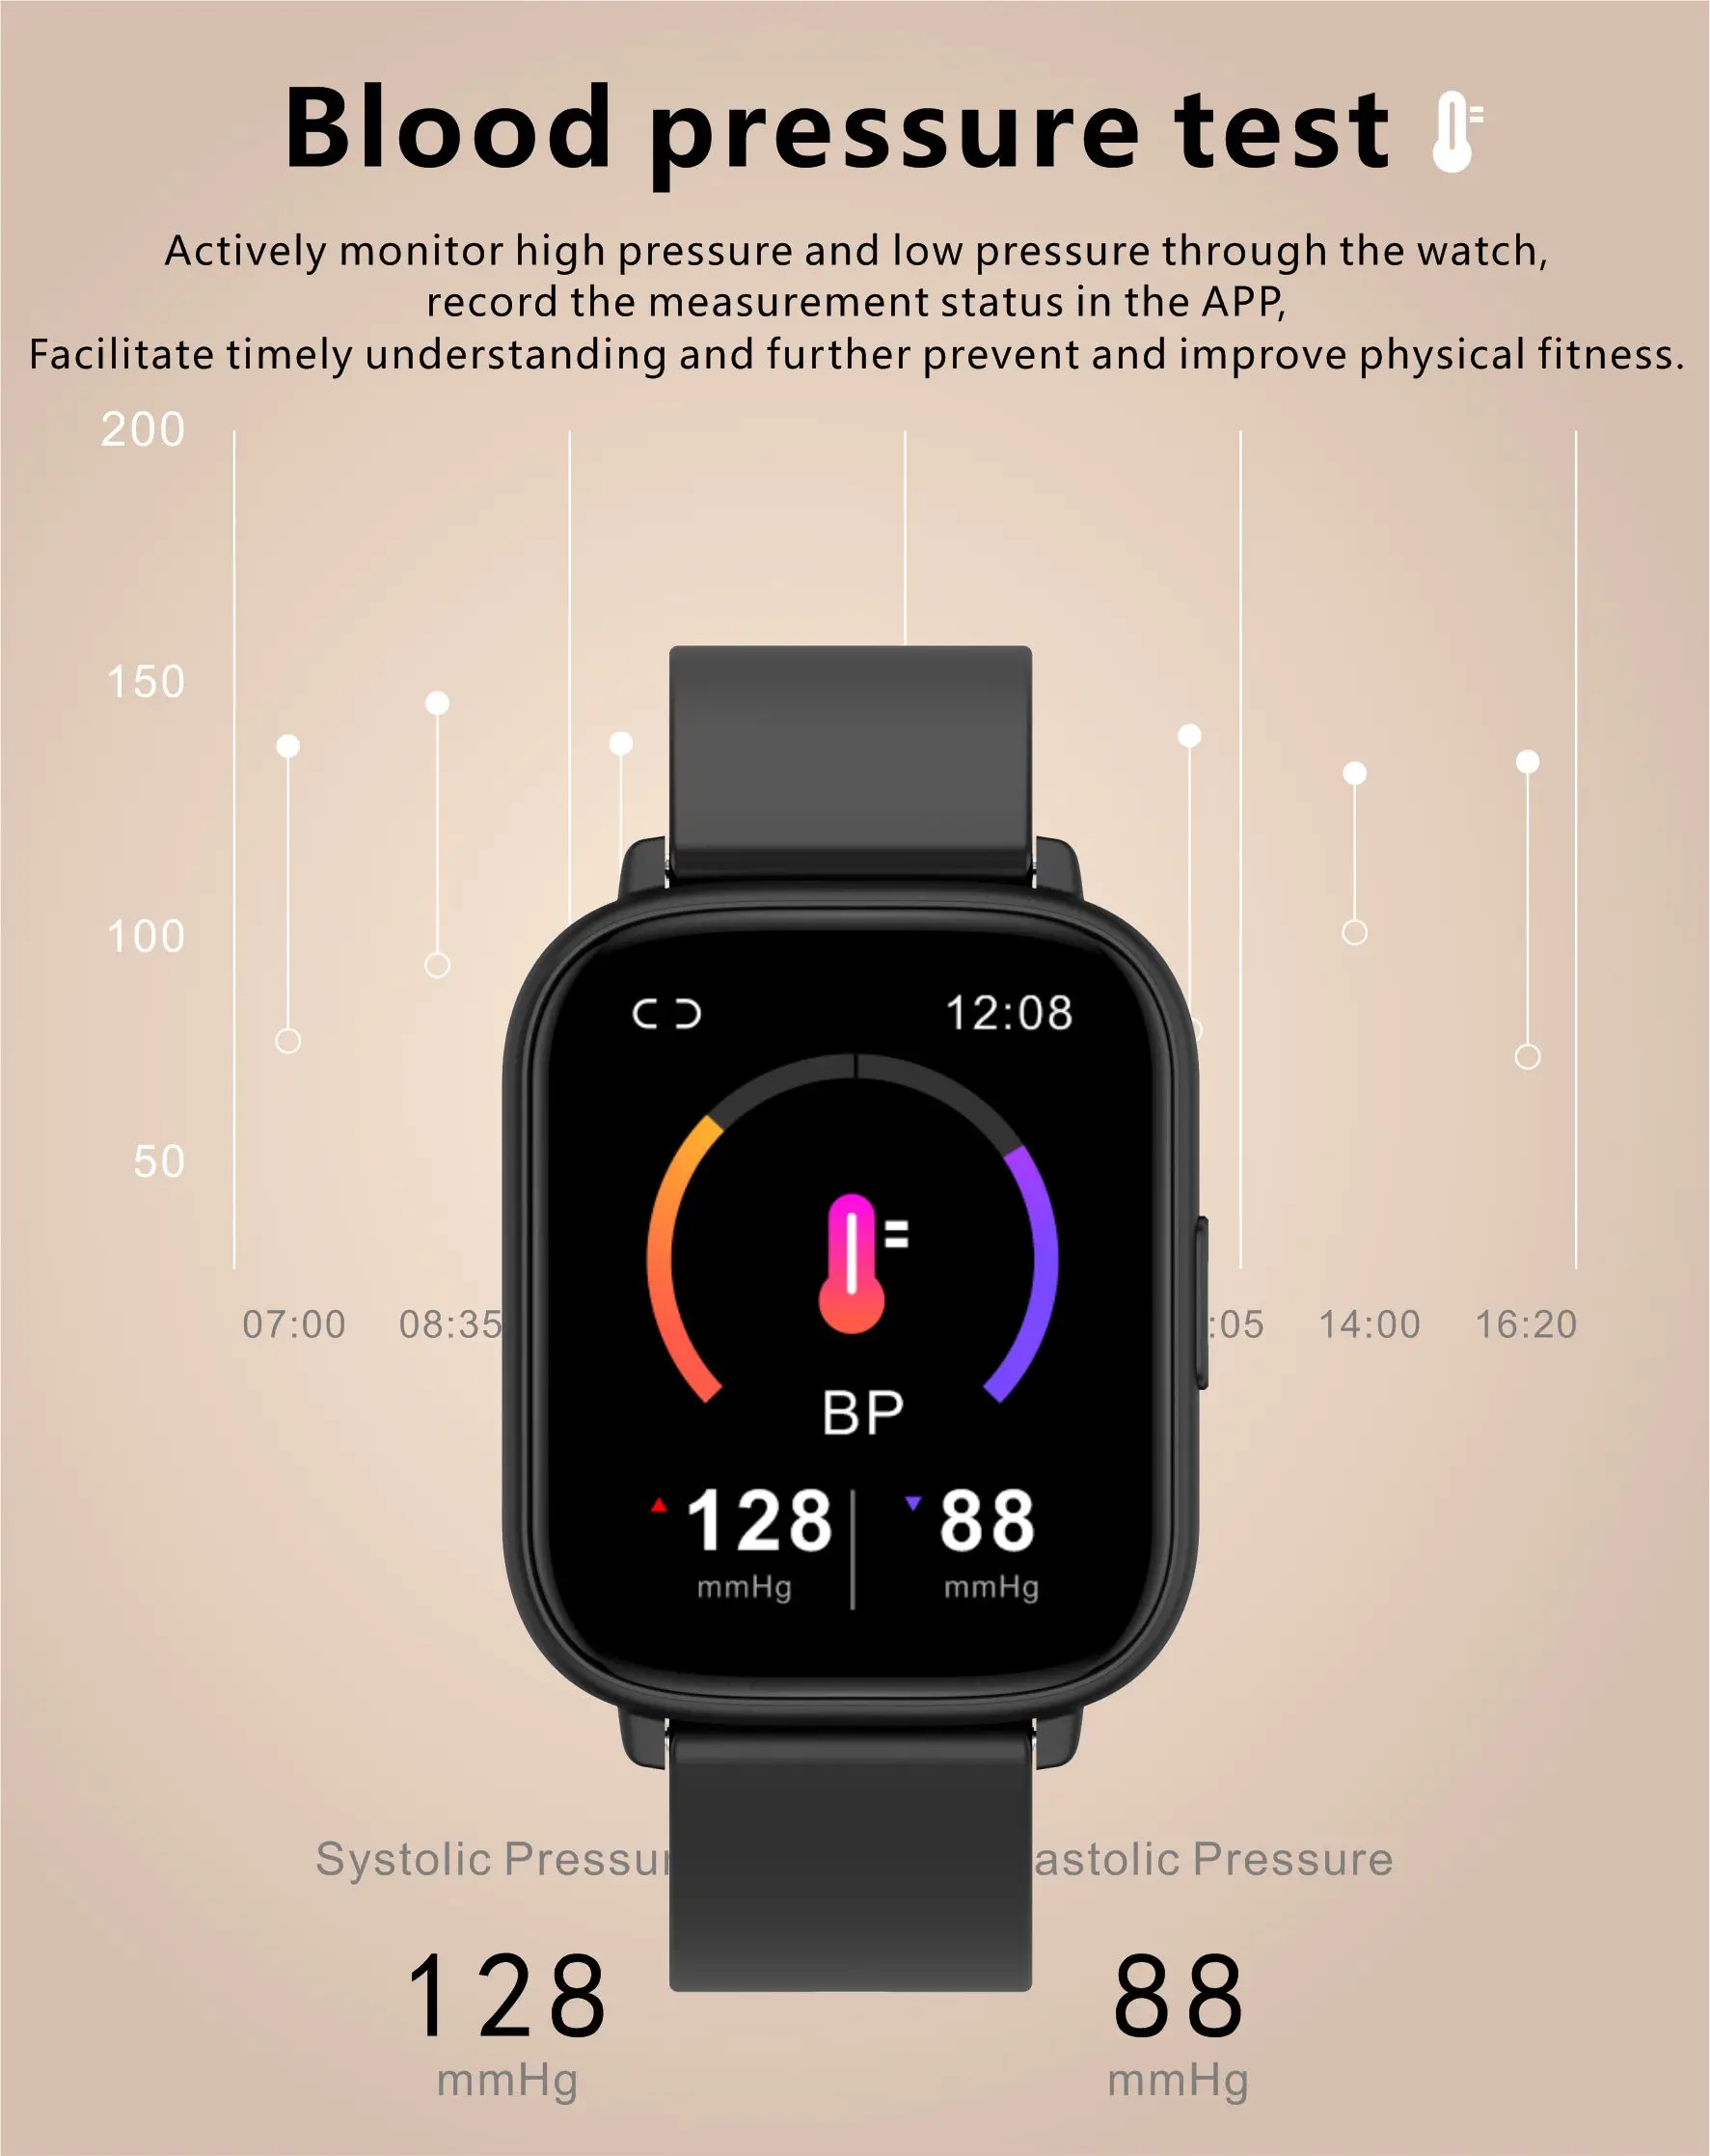 Gadgend 1.85inch large screen new smart watch men body temperature fitness tracker waterproof smartwatch for women android ios